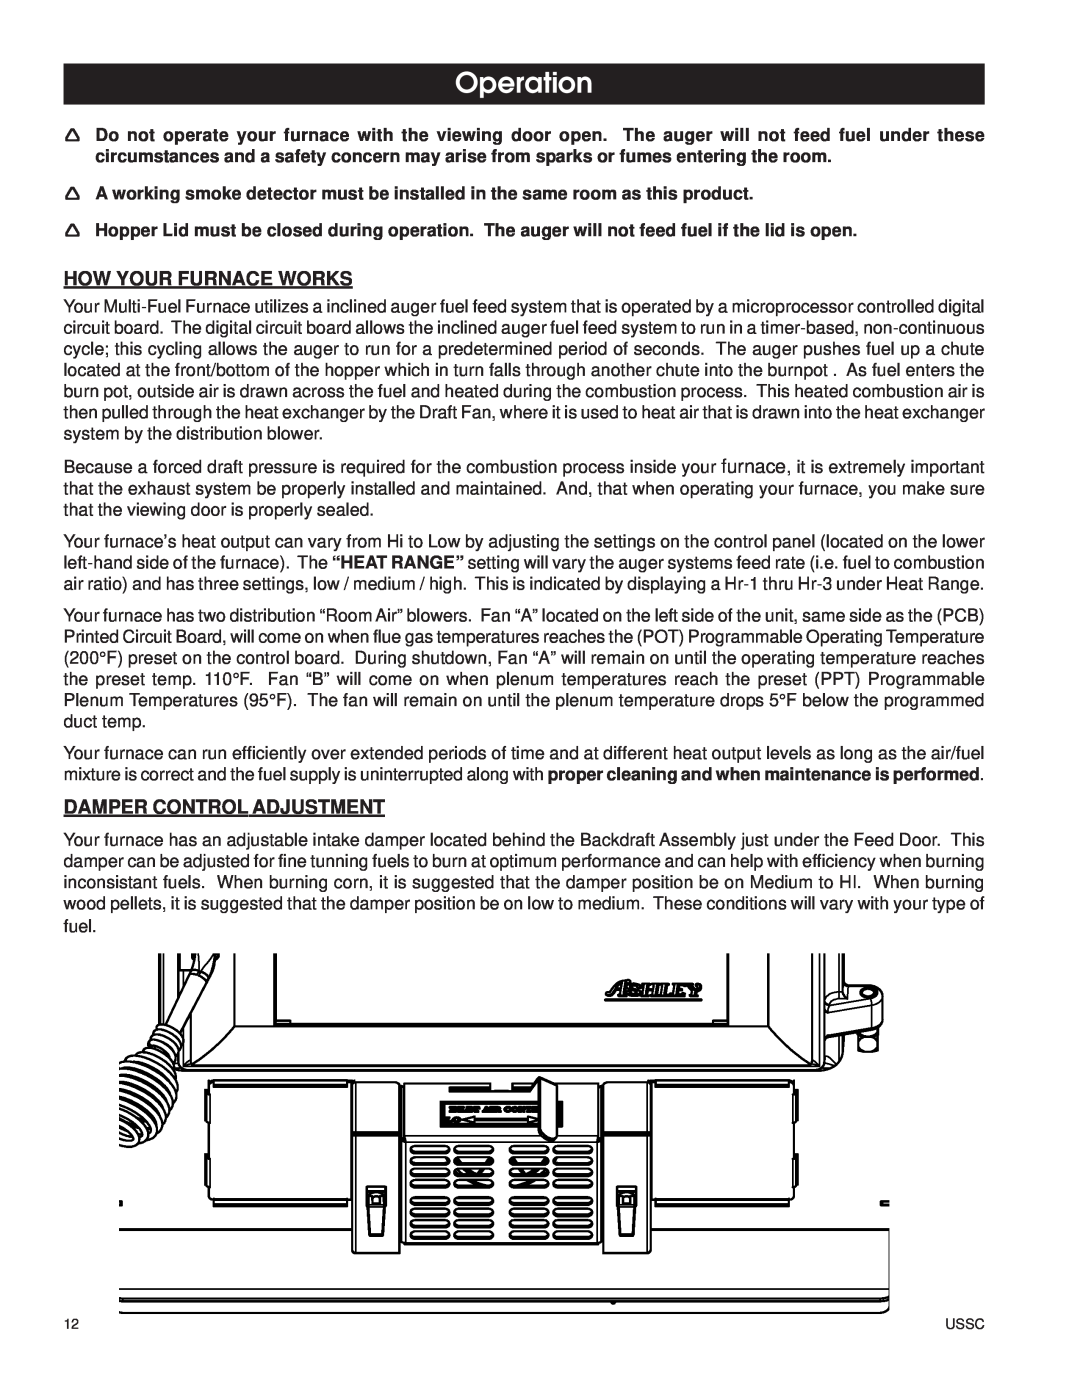 United States Stove 6100 owner manual Operation, How Your Furnace Works, Damper Control Adjustment 